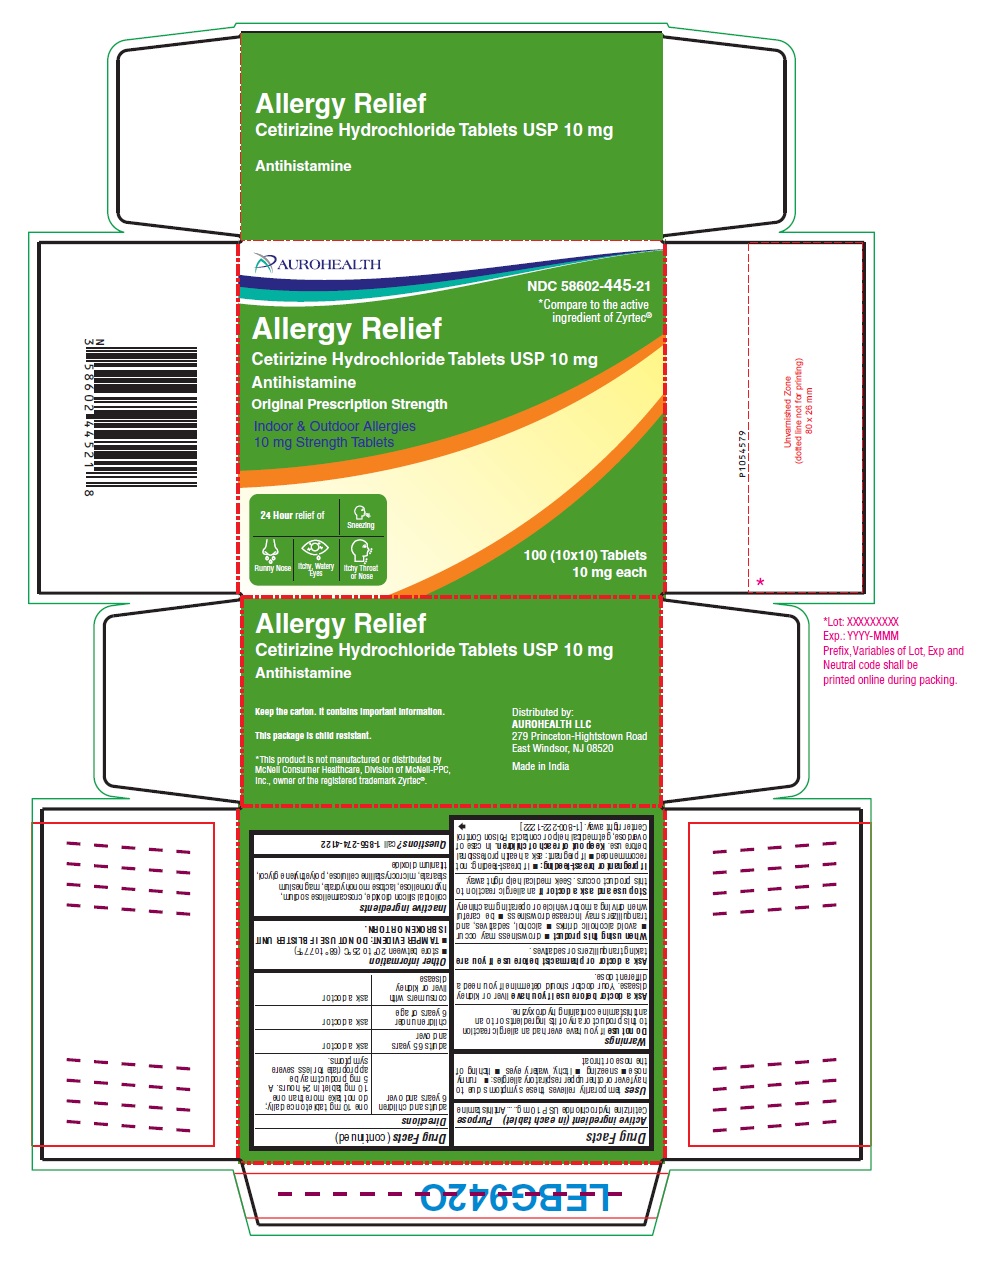 PACKAGE LABEL-PRINCIPAL DISPLAY PANEL - 10 mg (10 x 10 Blister Carton Label)